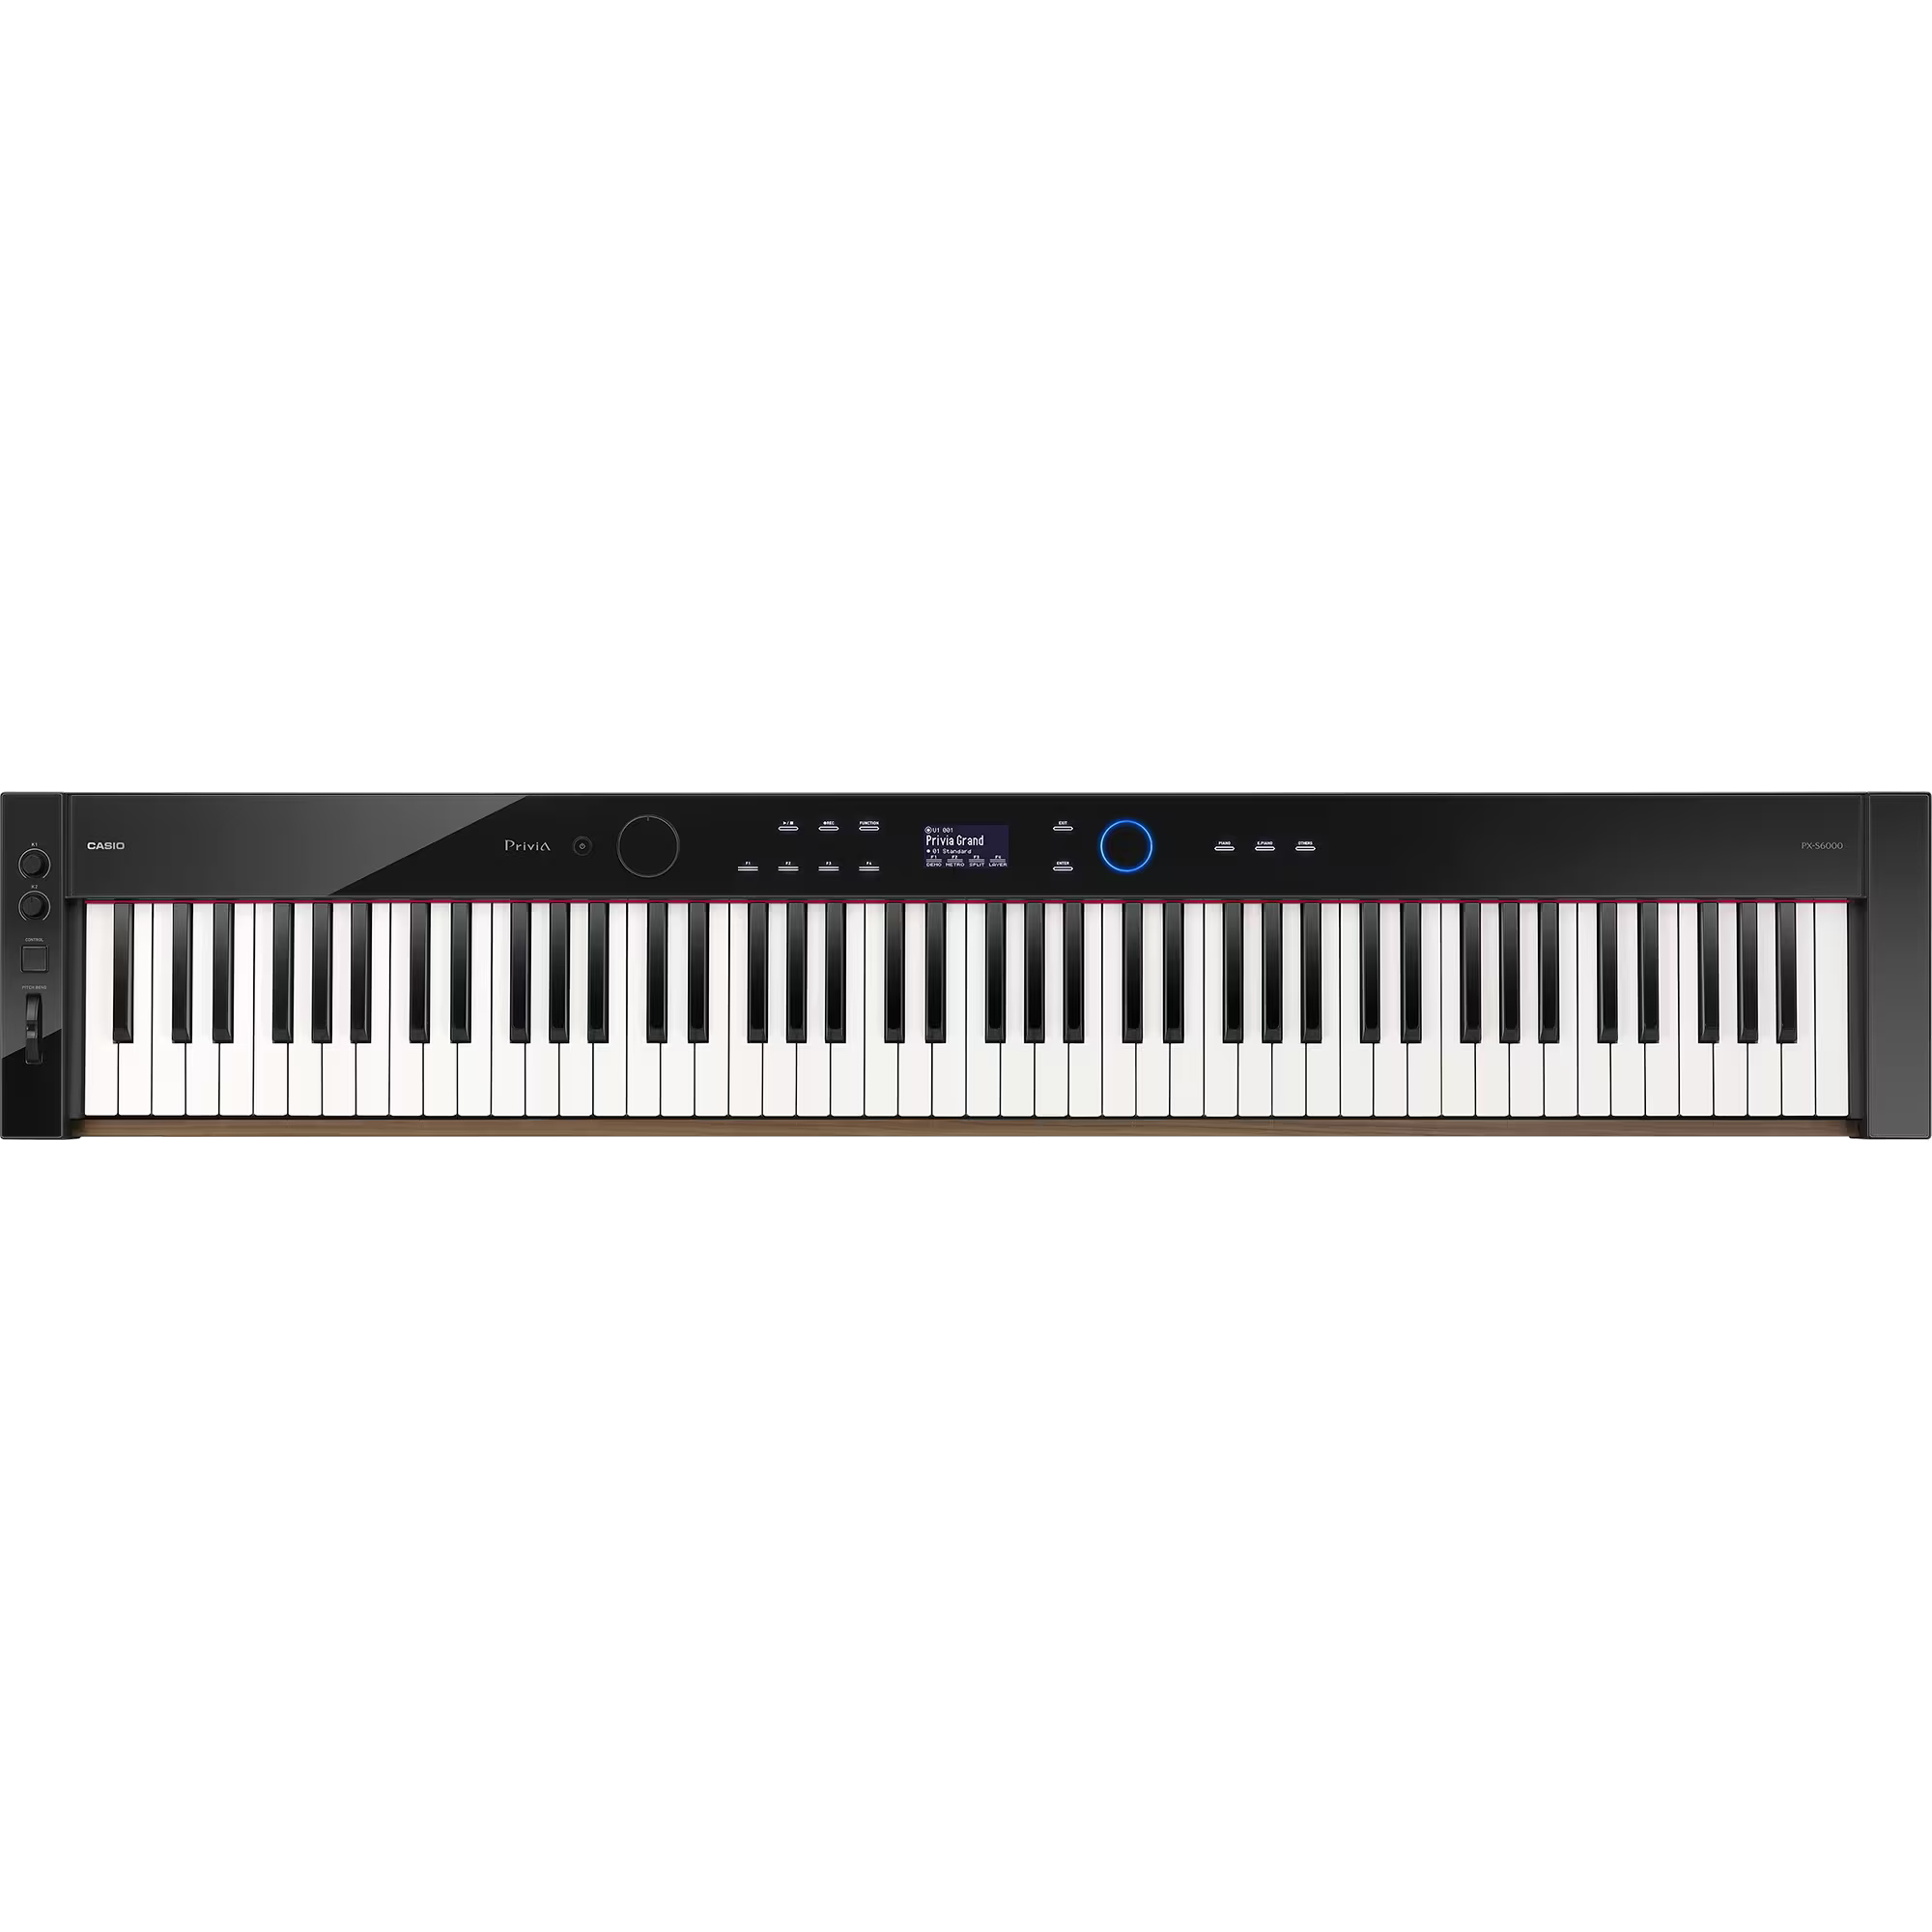 卸価格引取歓迎/配送可/美品カシオ電子ピアノ Privia PX-350MBK 88鍵 鍵盤楽器